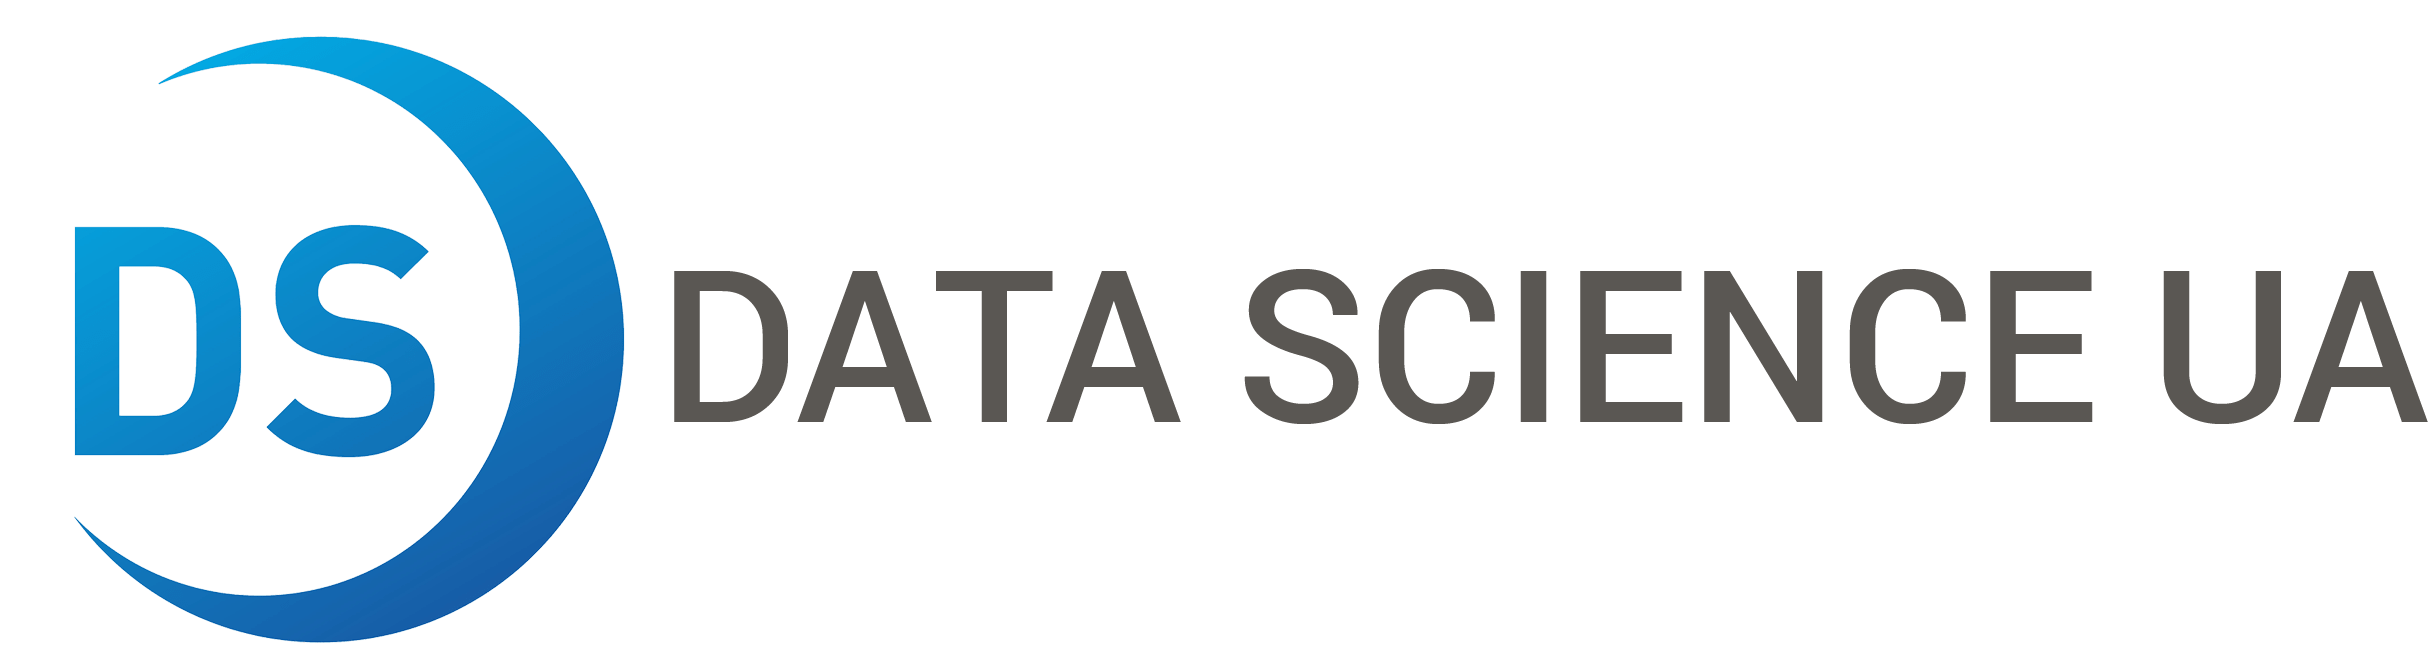 Data Science UA